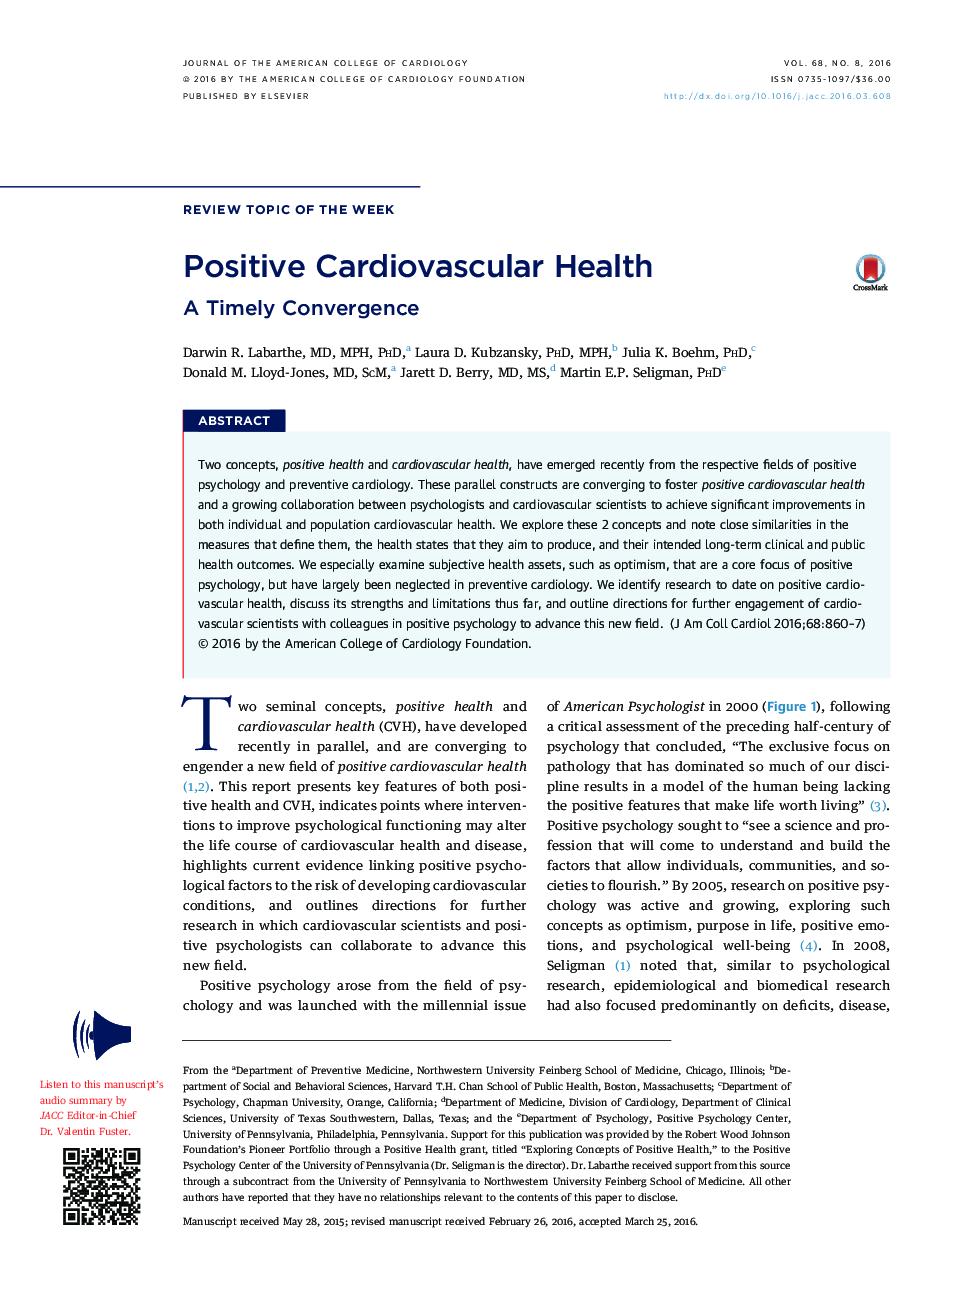 Positive Cardiovascular Health: A Timely Convergence